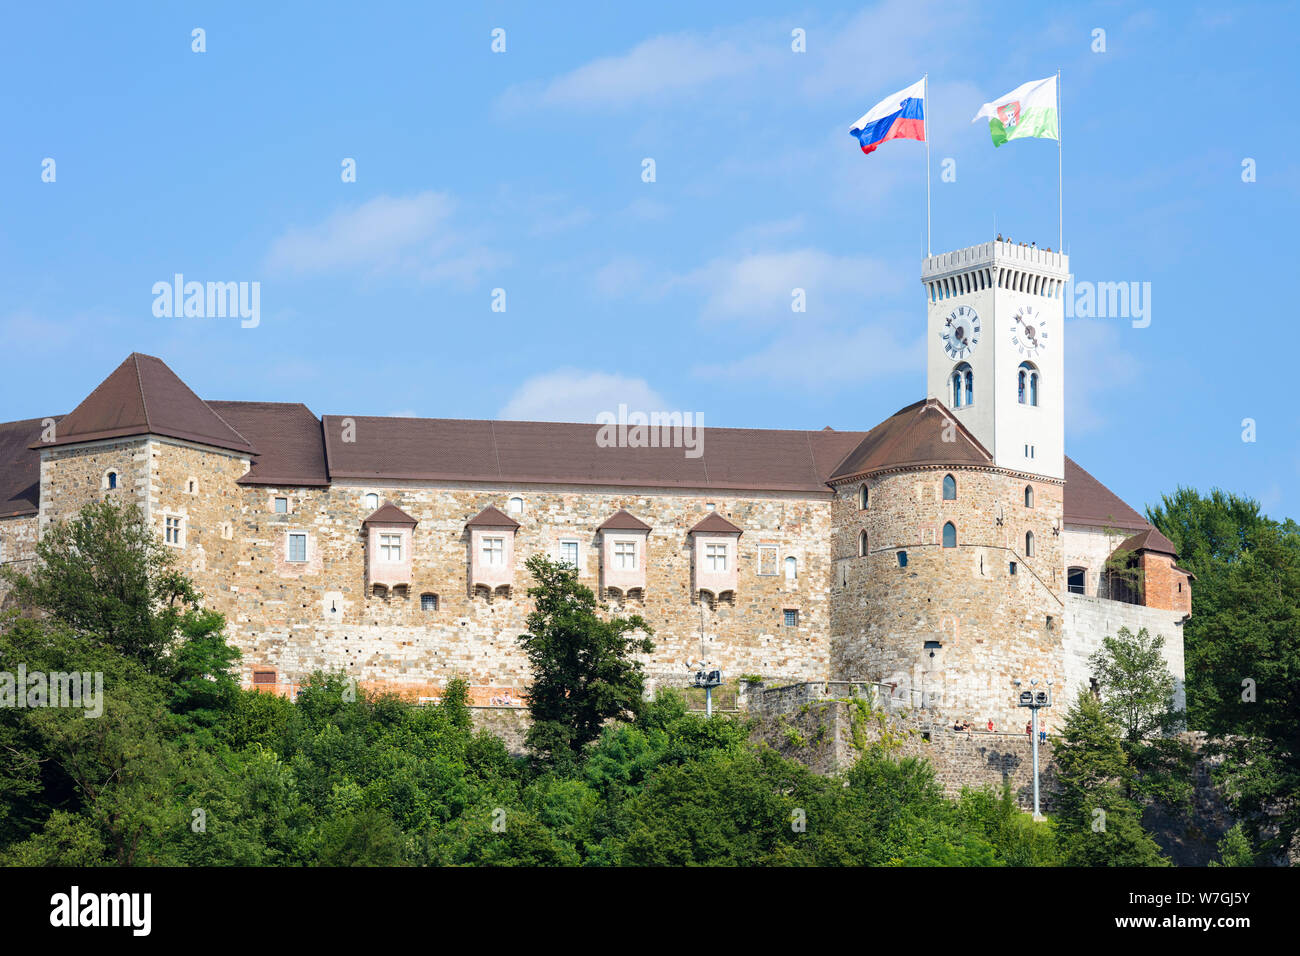 Castle of ljubljana castle with slovenian flag flying on Castle Hill Old Town Ljubljana Slovenia EU Europe Stock Photo